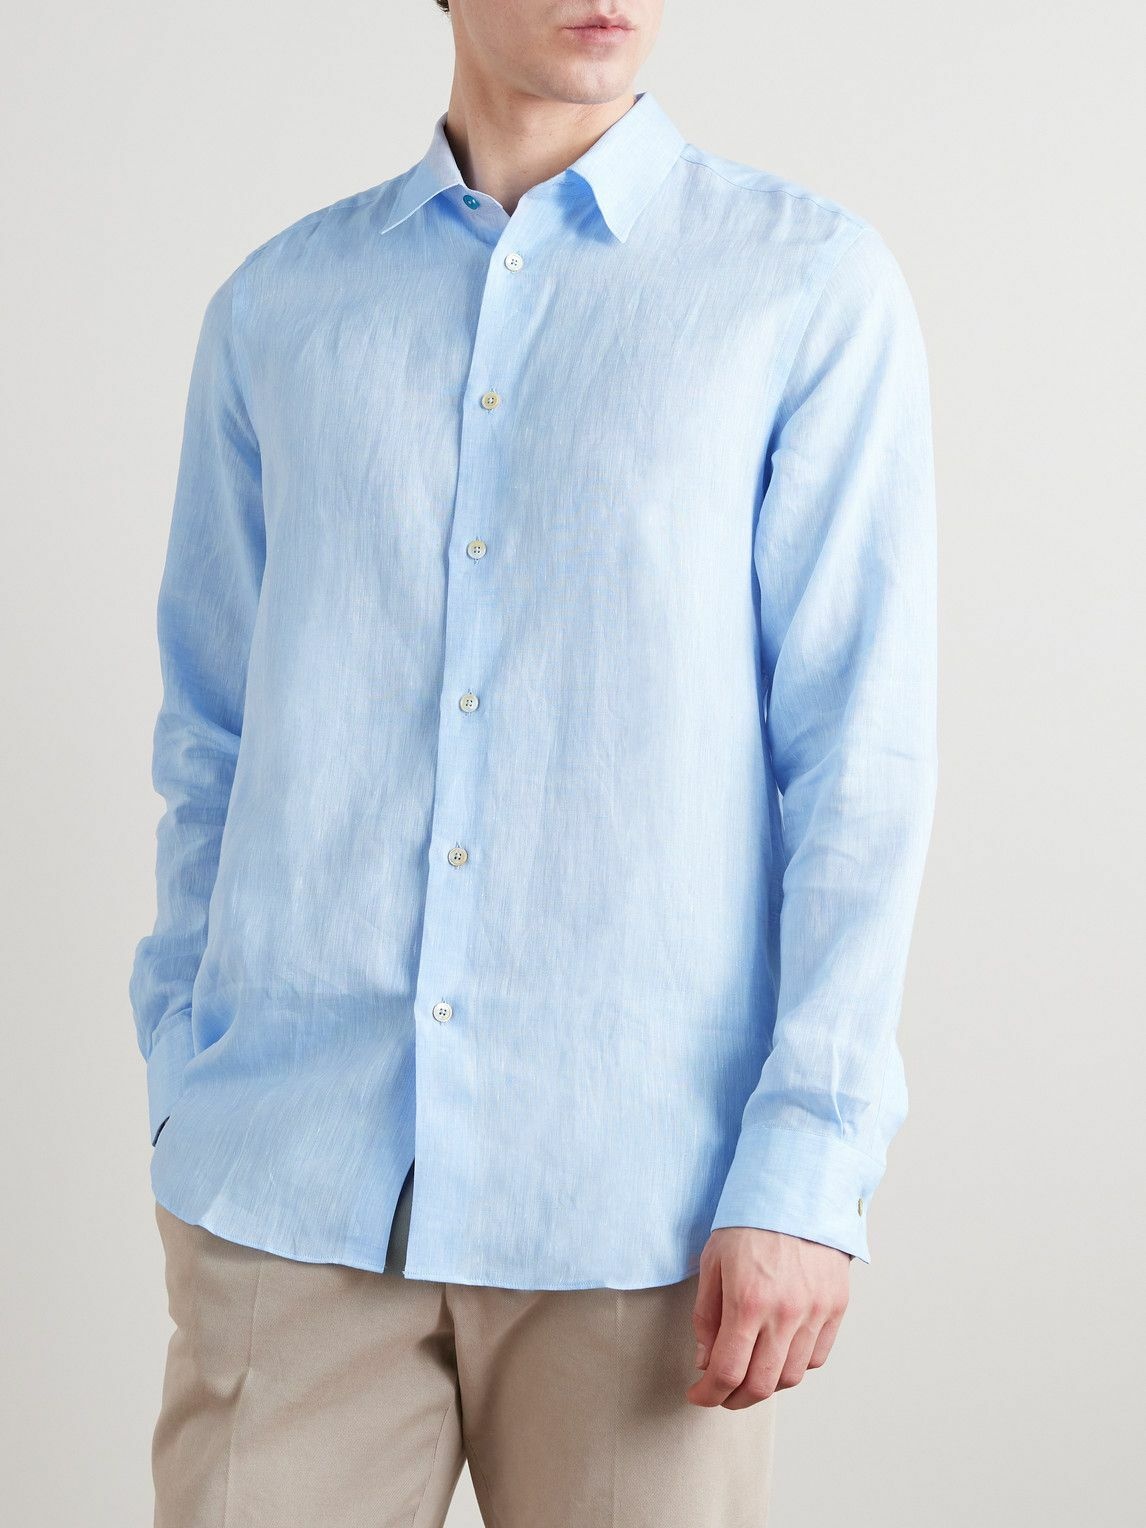 Paul Smith - Linen Shirt - Blue Paul Smith